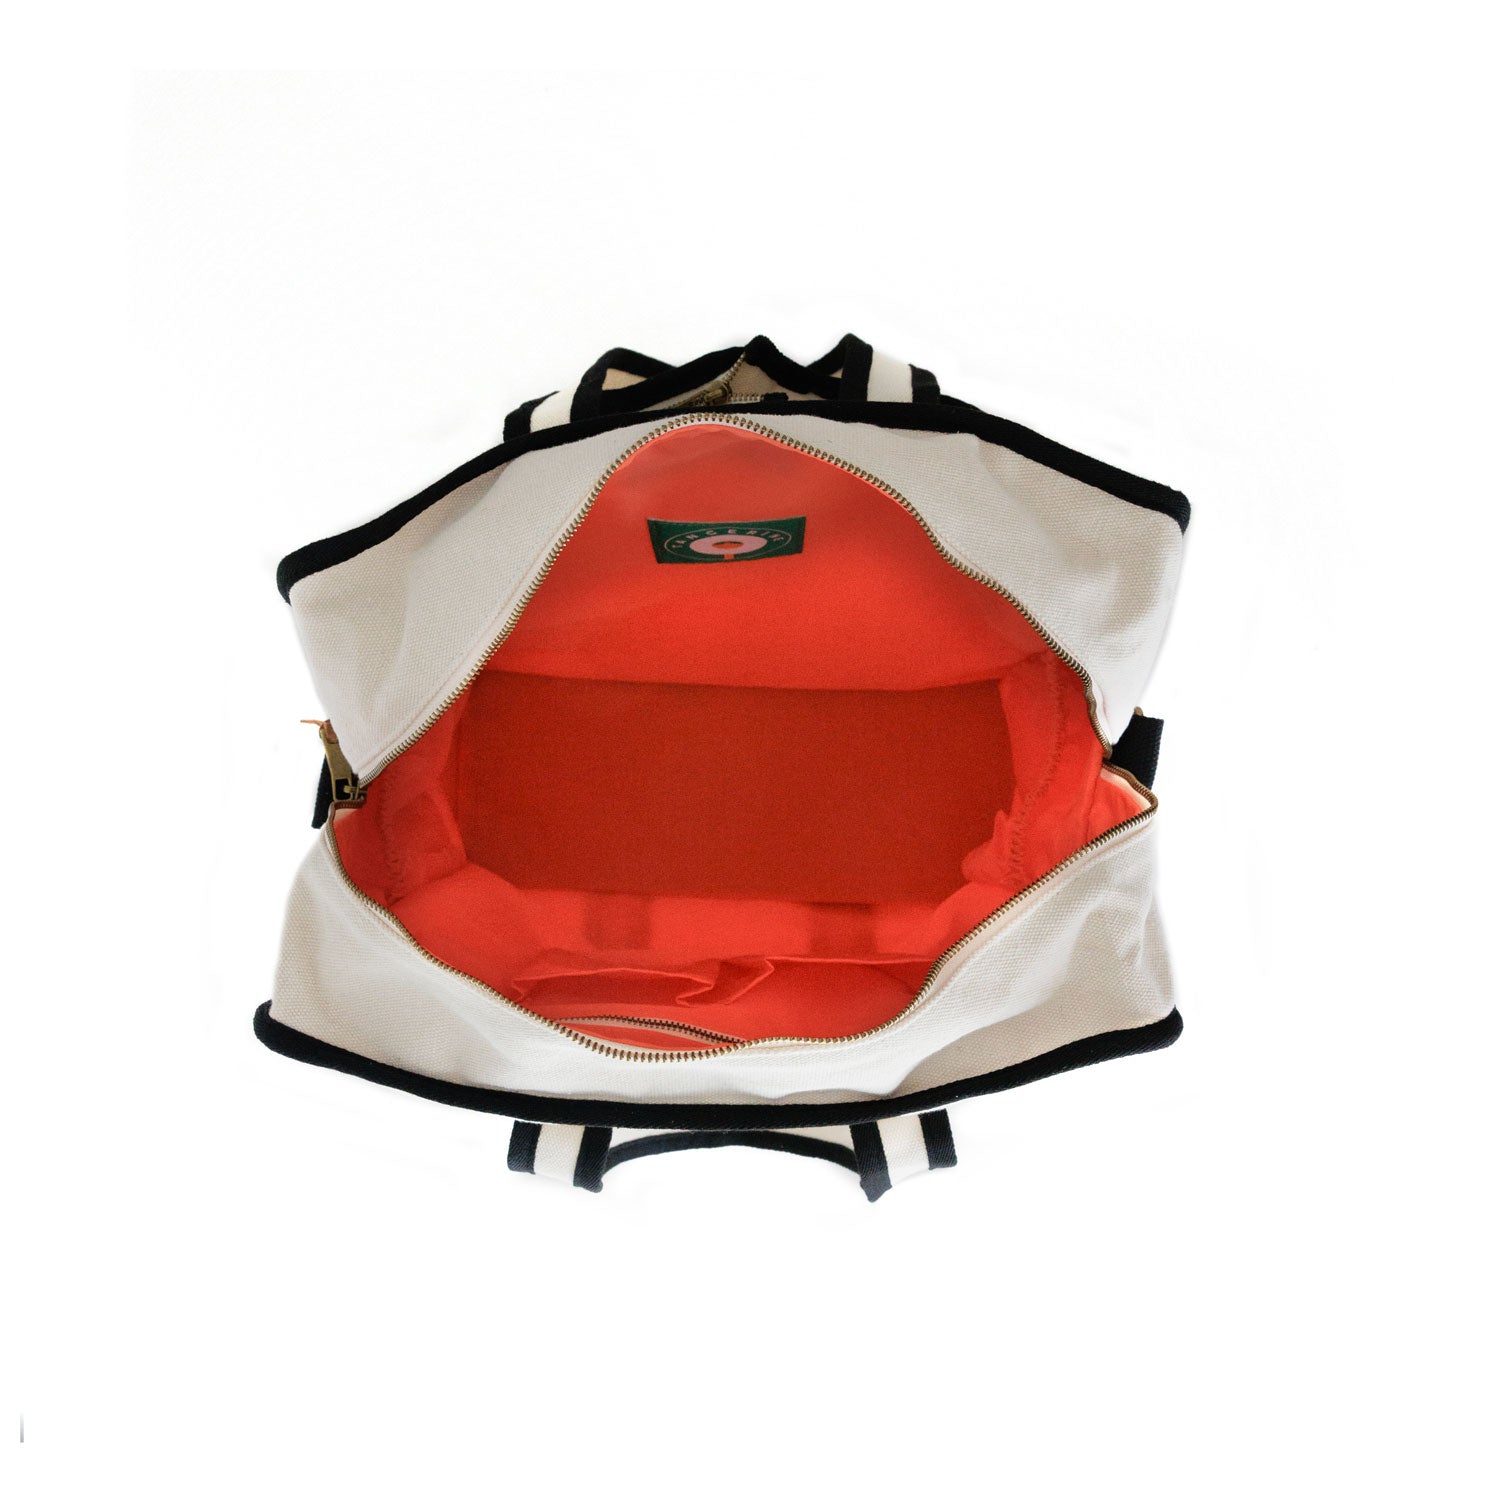 Inside of Tito's X Tangerine Pickleball Bag with zipper enclosure and orange interior fabric